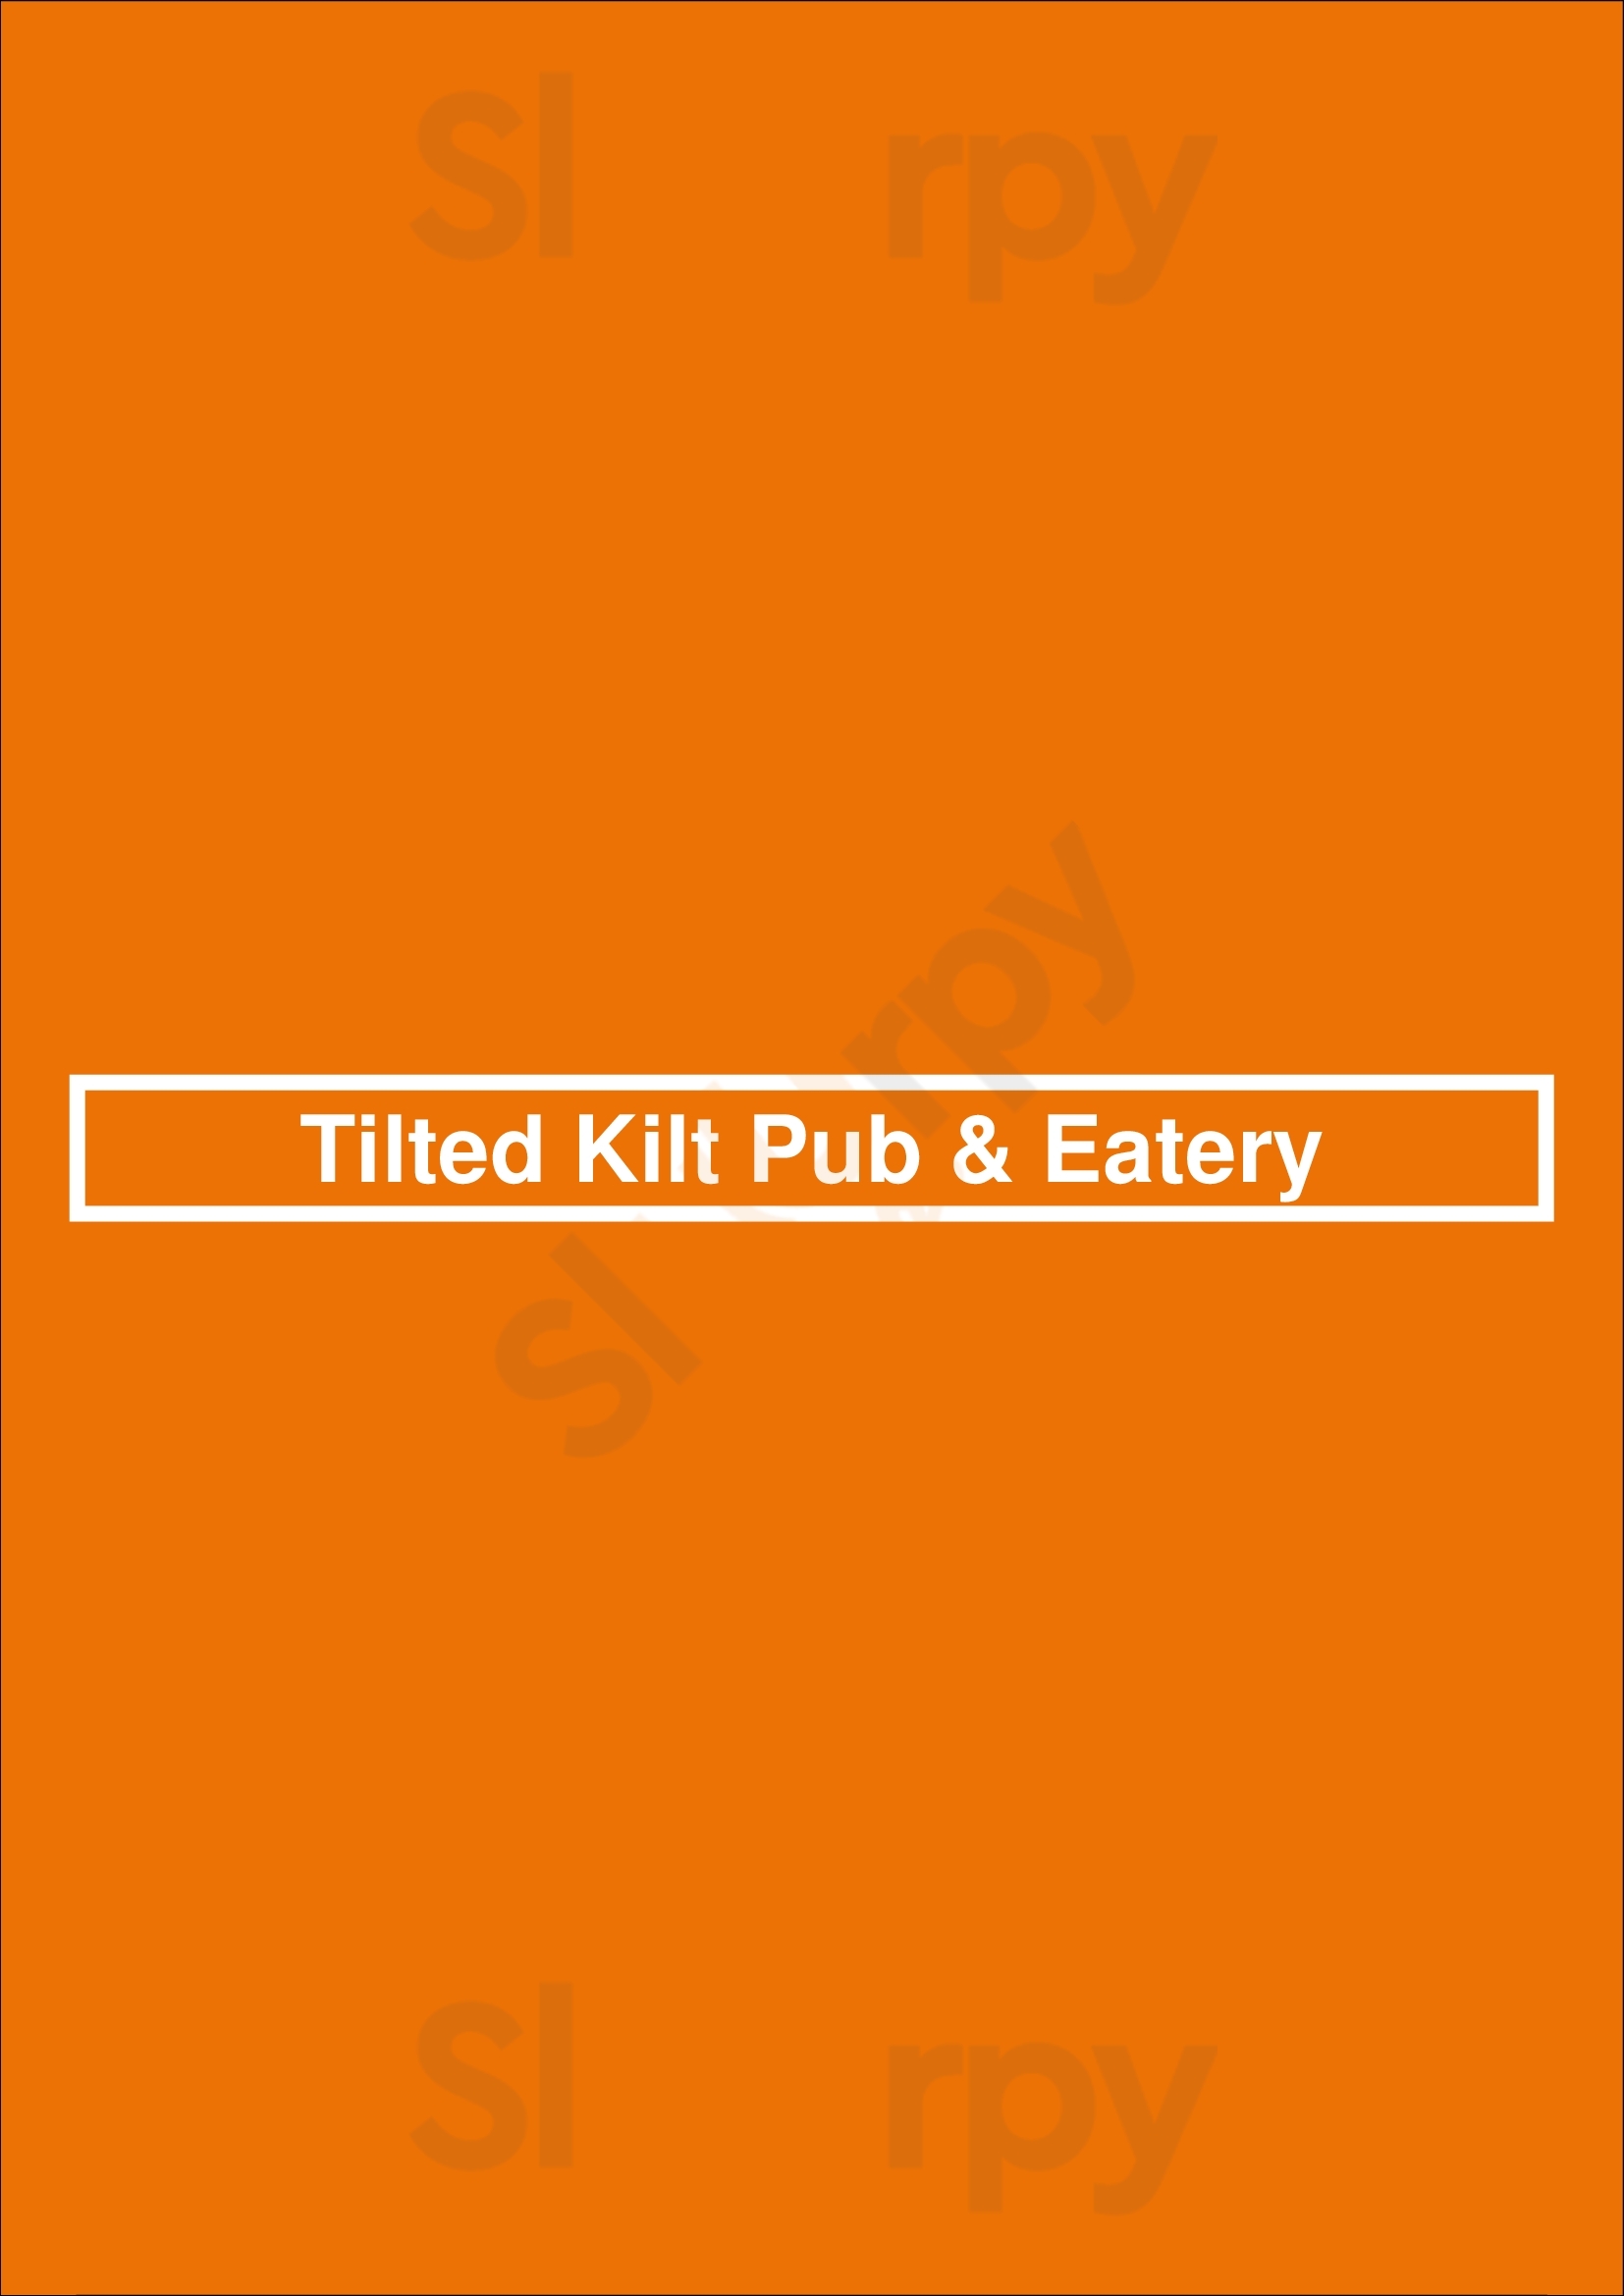 Tilted Kilt Pub & Eatery Atlanta Menu - 1